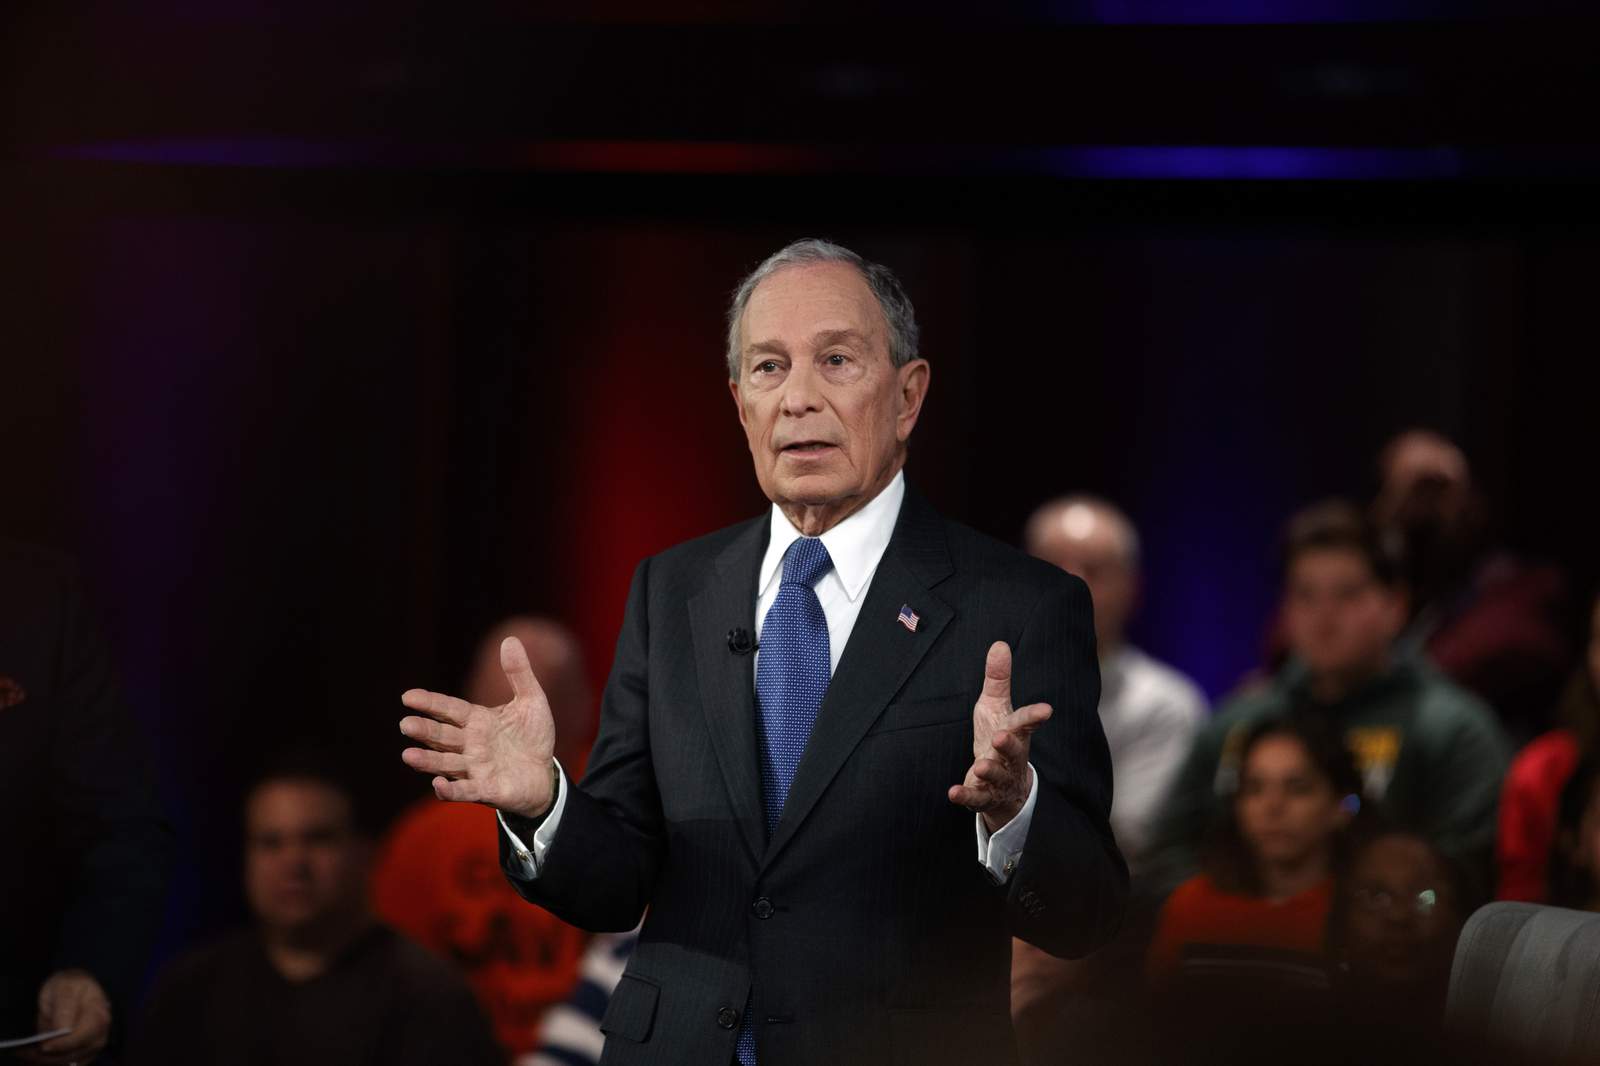 Bloomberg raises millions to help Florida felons vote